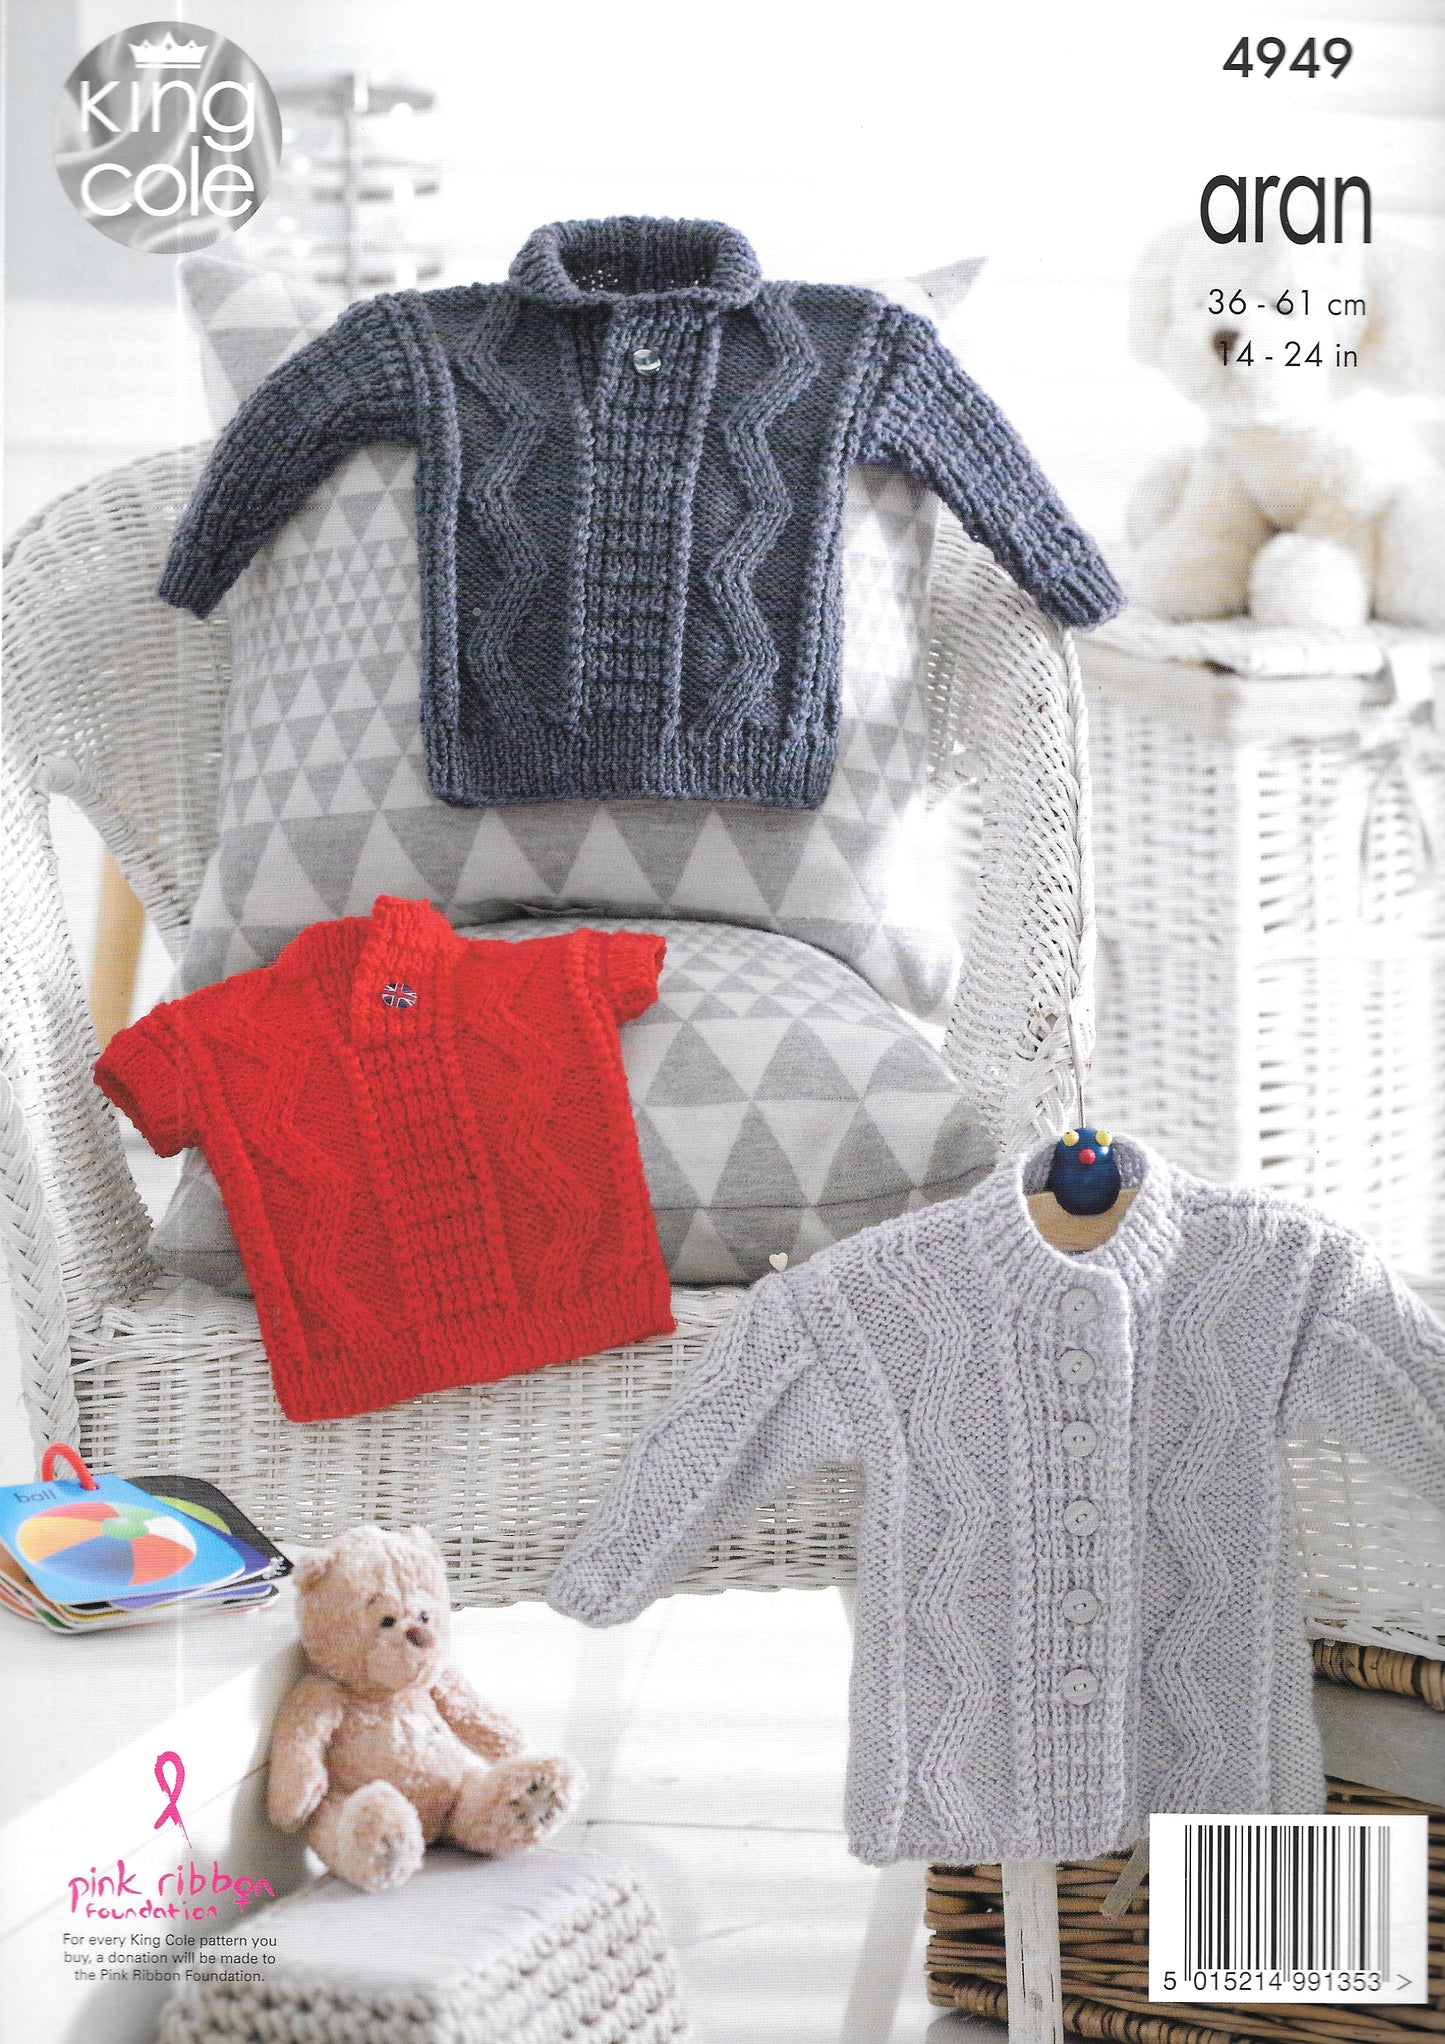 4949 King Cole knitting pattern. Child's jacket and sweater. Aran